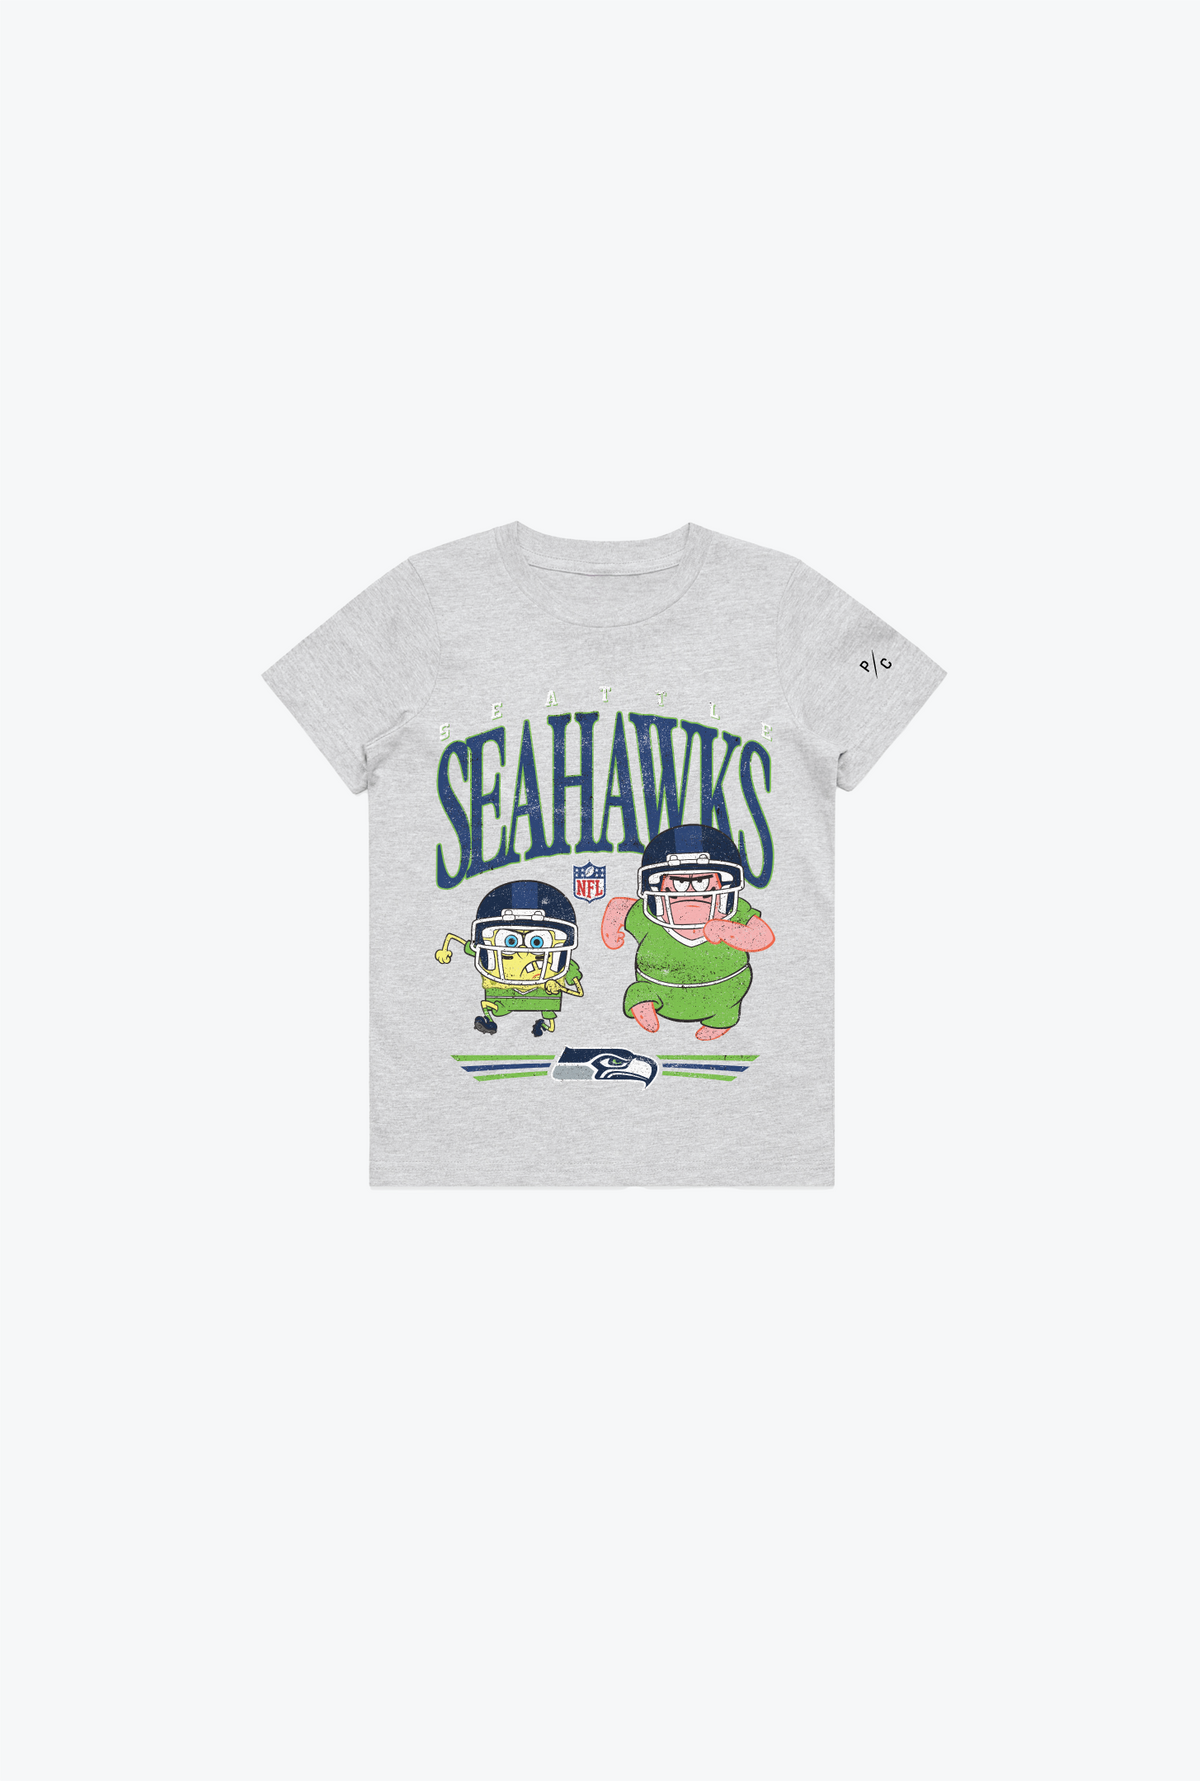 Spongebob & Patrick Rush Kids T-Shirt - Seattle Seahawks